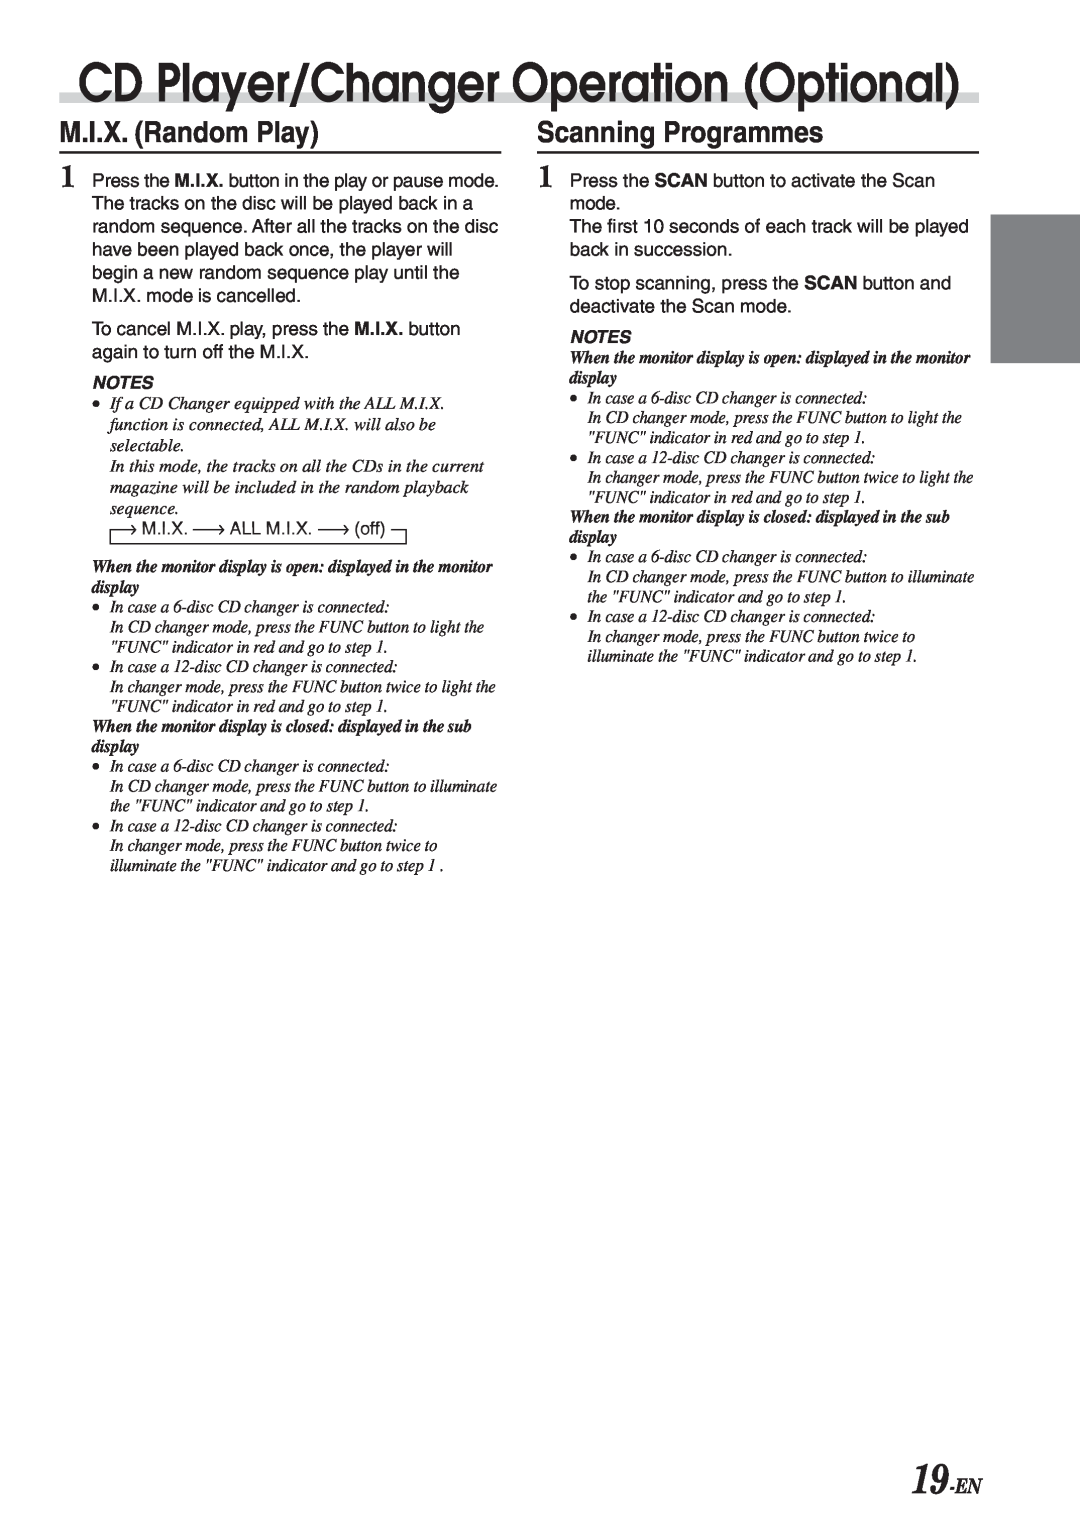 Alpine CVA-1003R owner manual M.I.X. Random Play, Scanning Programmes, 19-EN, CD Player/Changer Operation Optional 